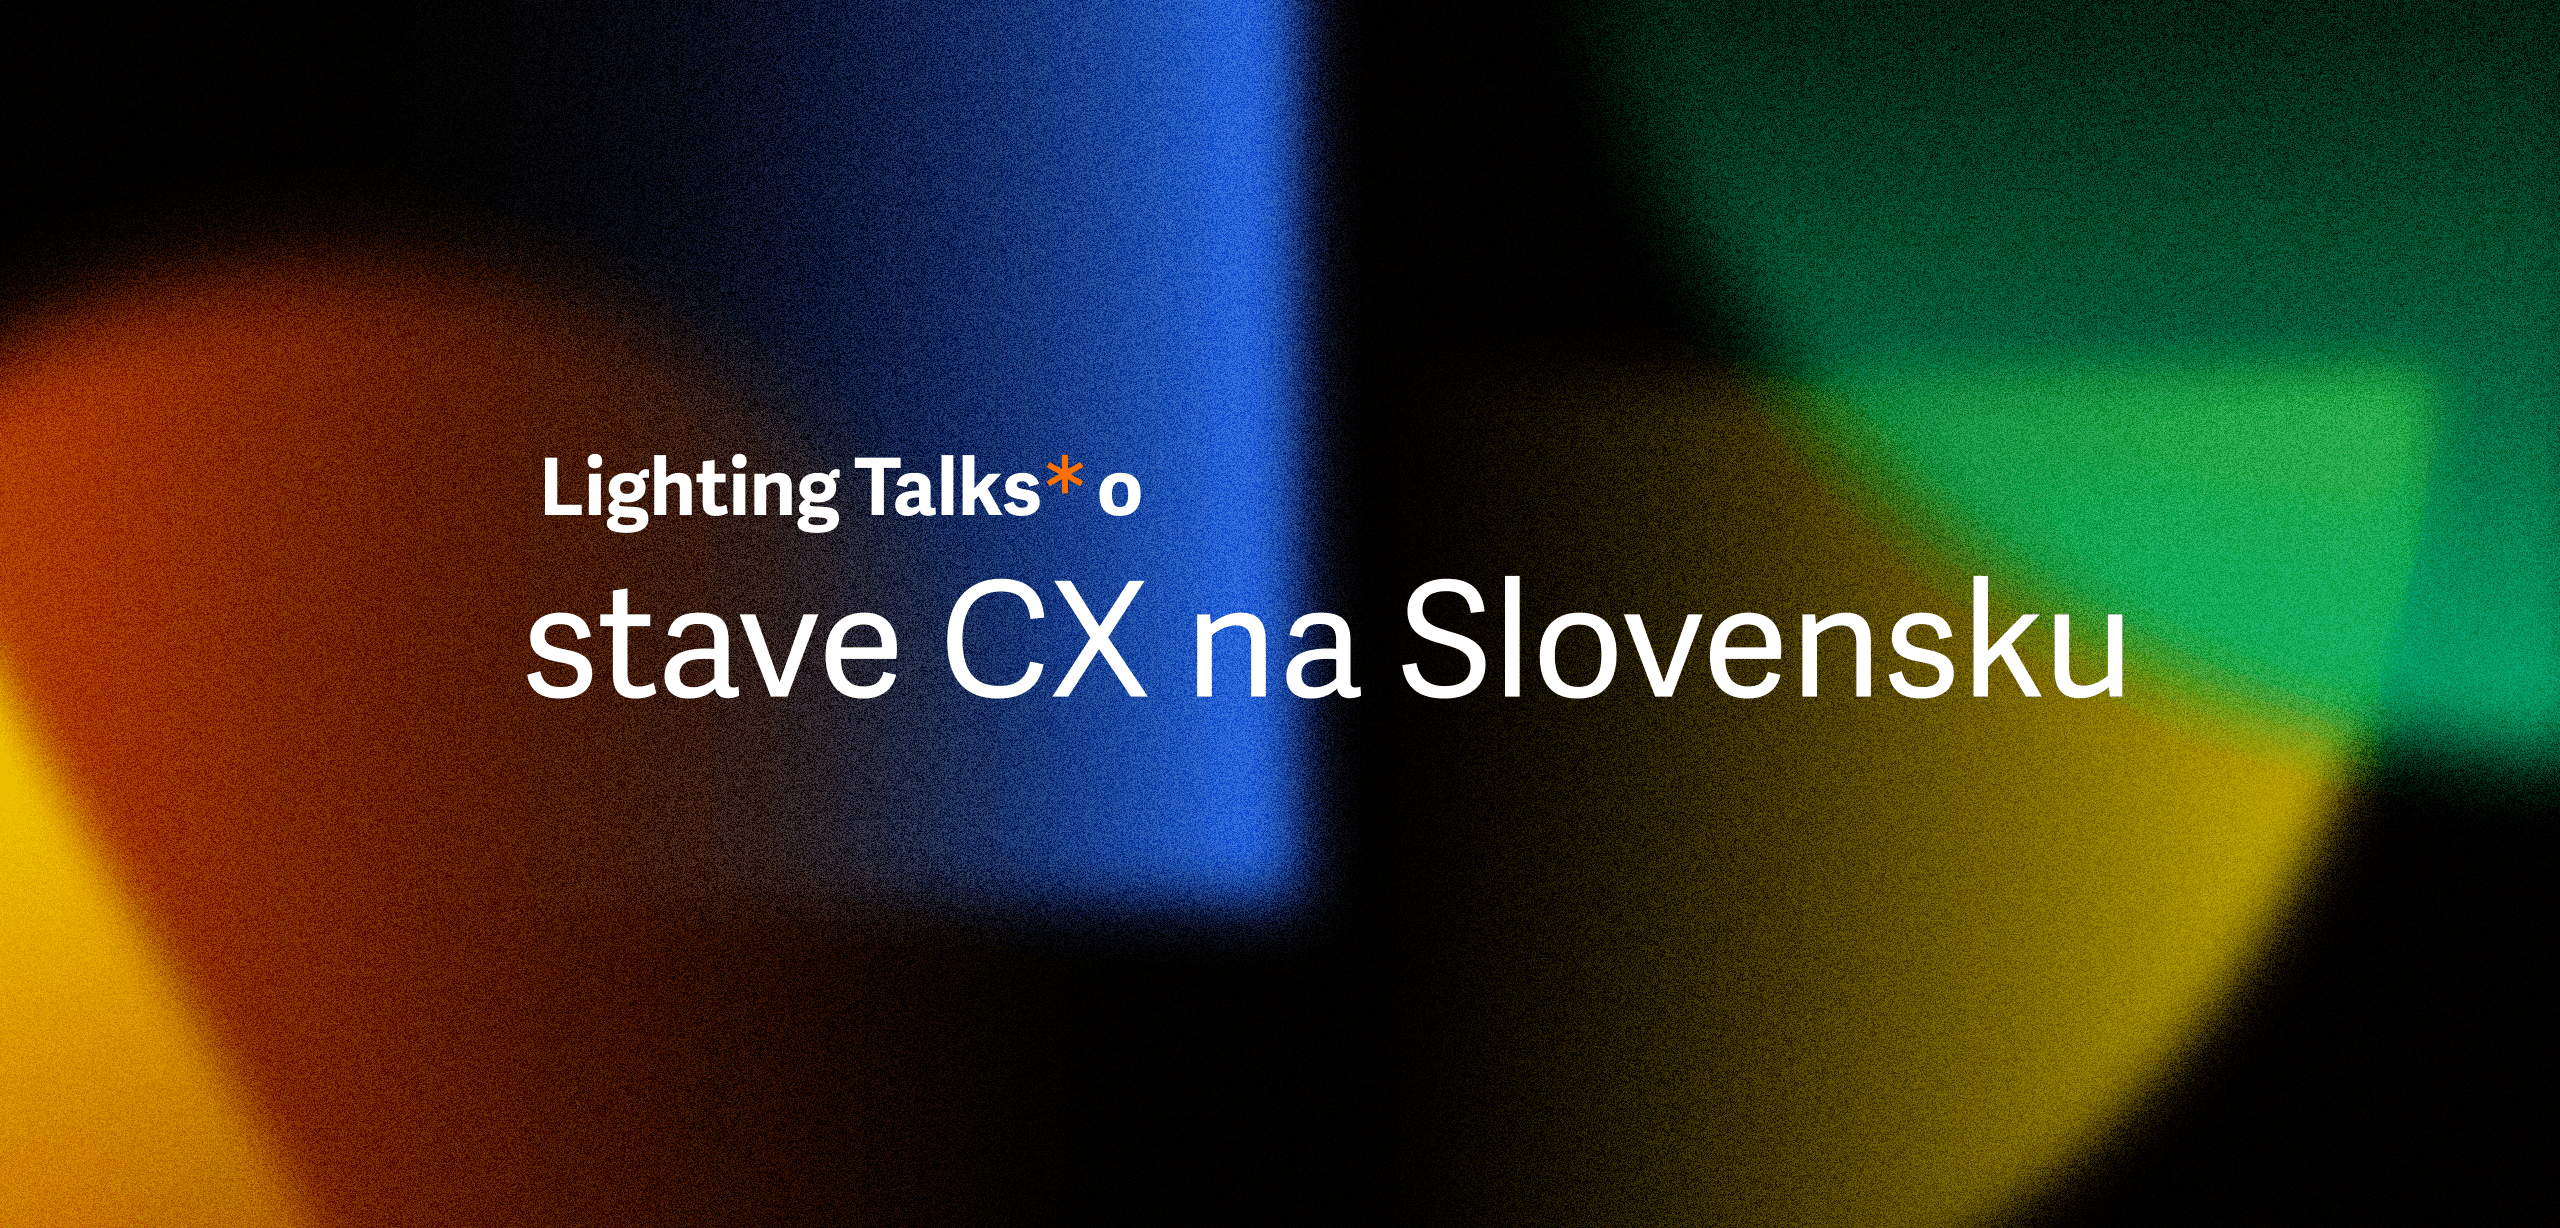 Lighting Talks* o stave CX na Slovensku